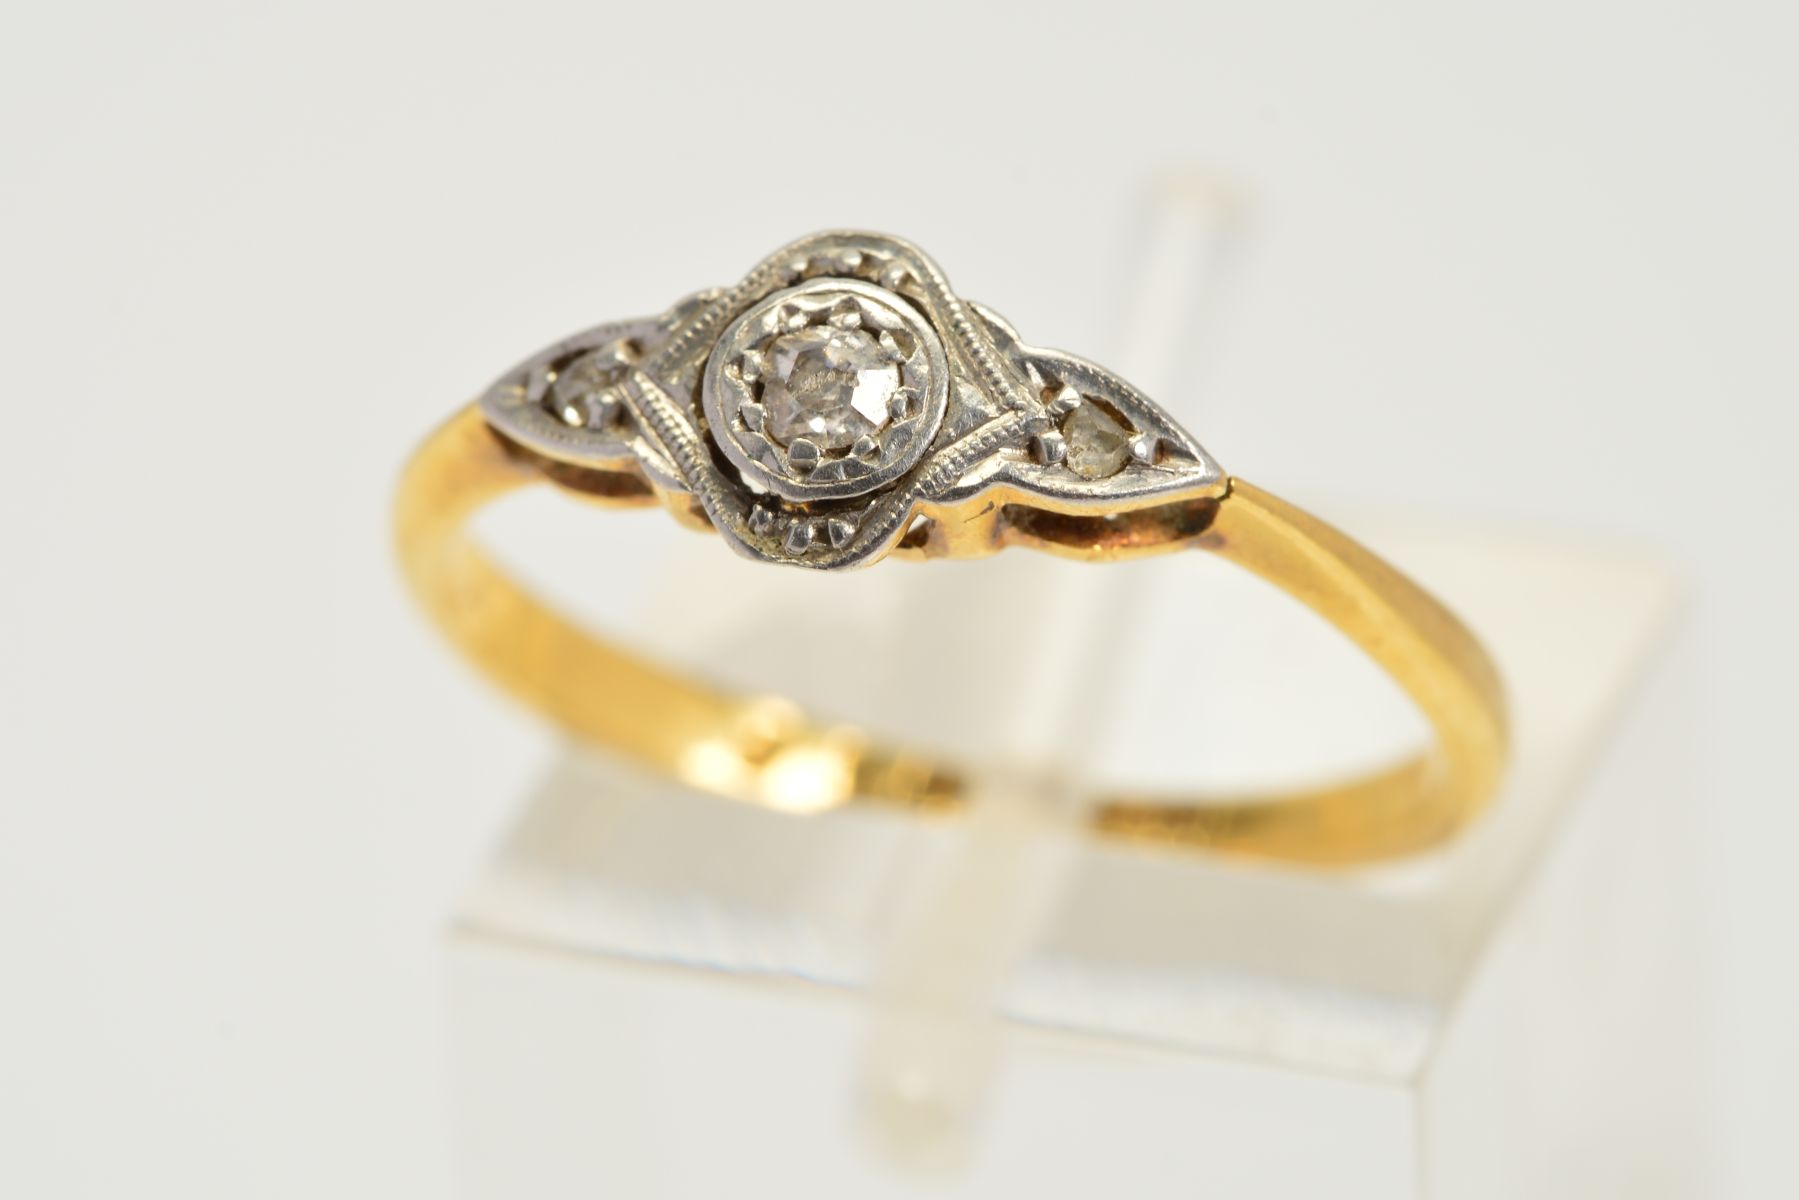 AN EARLY 20TH CENTURY DIAMOND SINGLE STONE RING, estimated diamond weight 0.10ct, ring size J1/2,